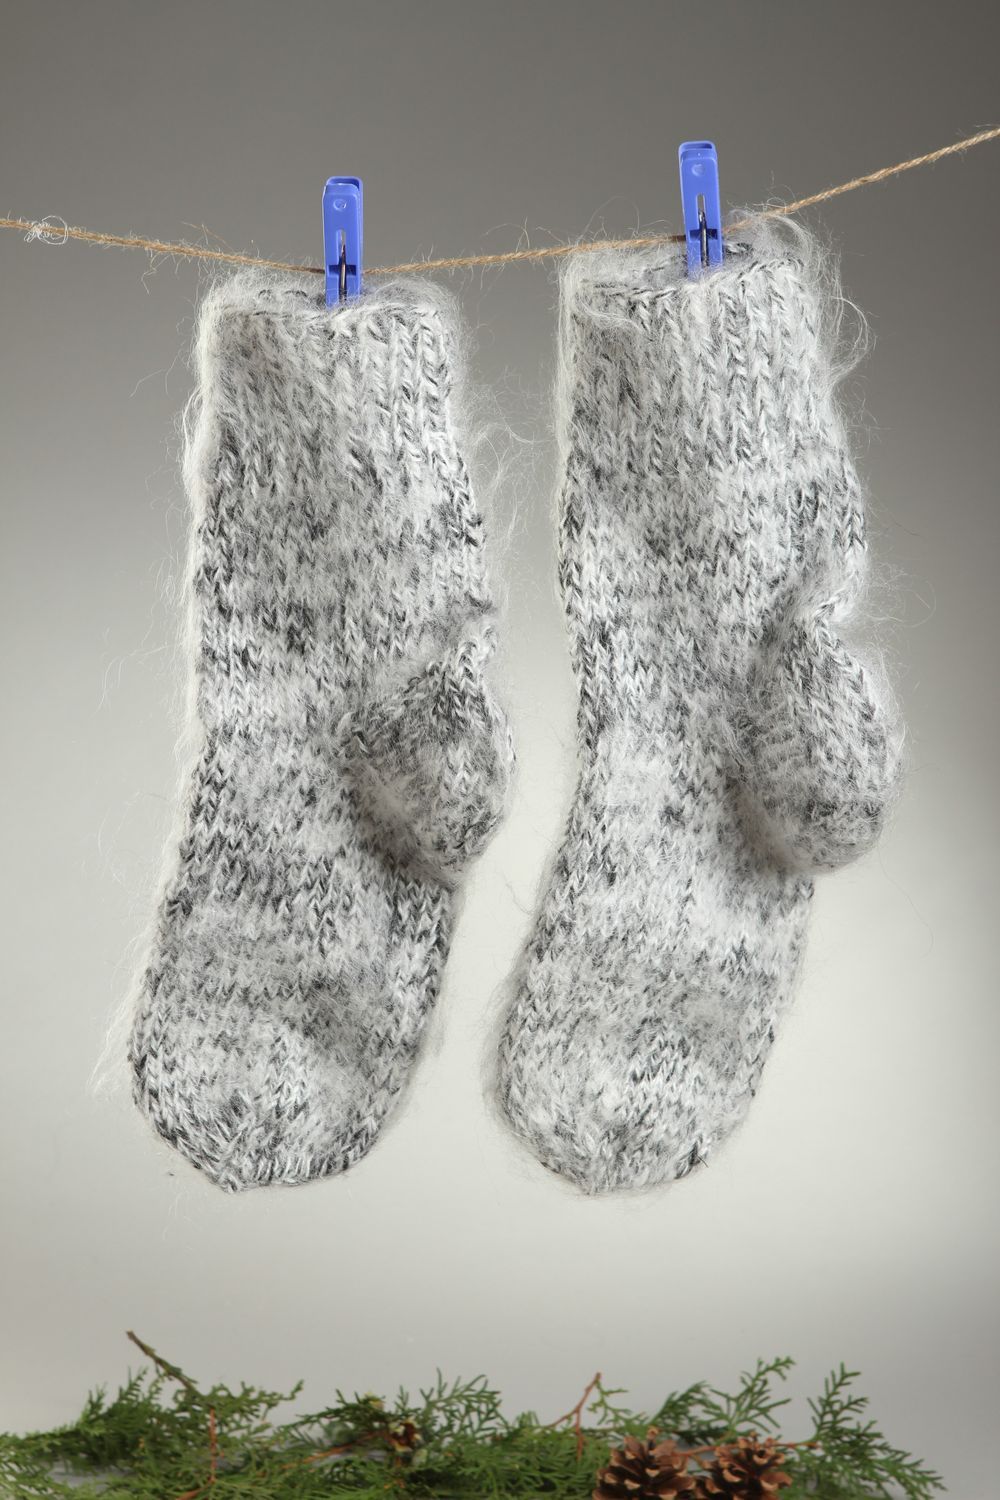 Handmade wool socks knitted socks best wool socks winter clothing cool gifts photo 1